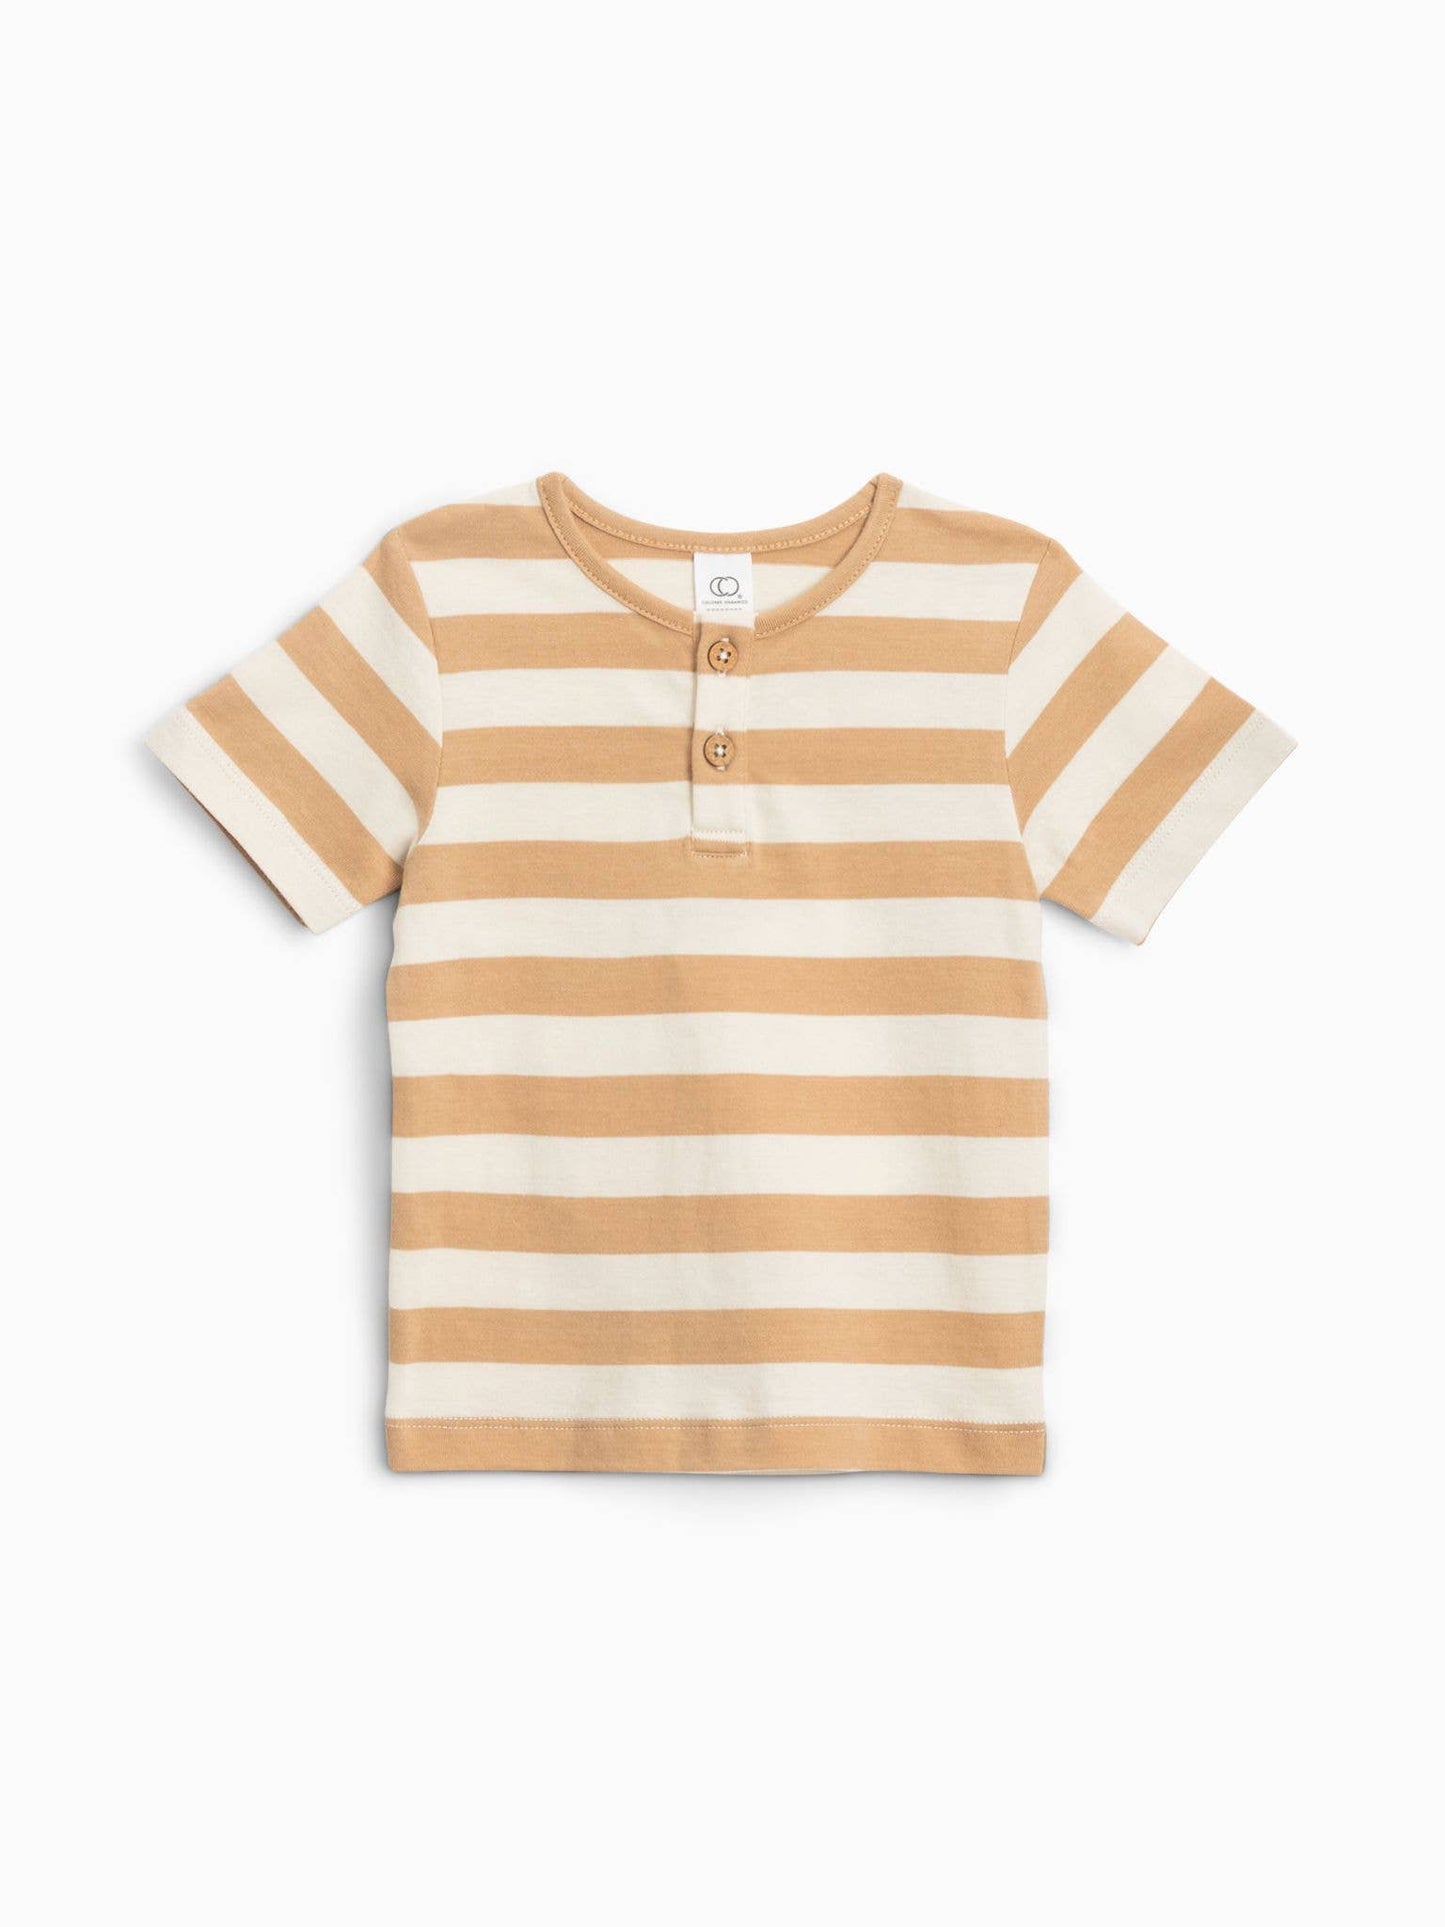 Henley Shirt - Tan Stripe